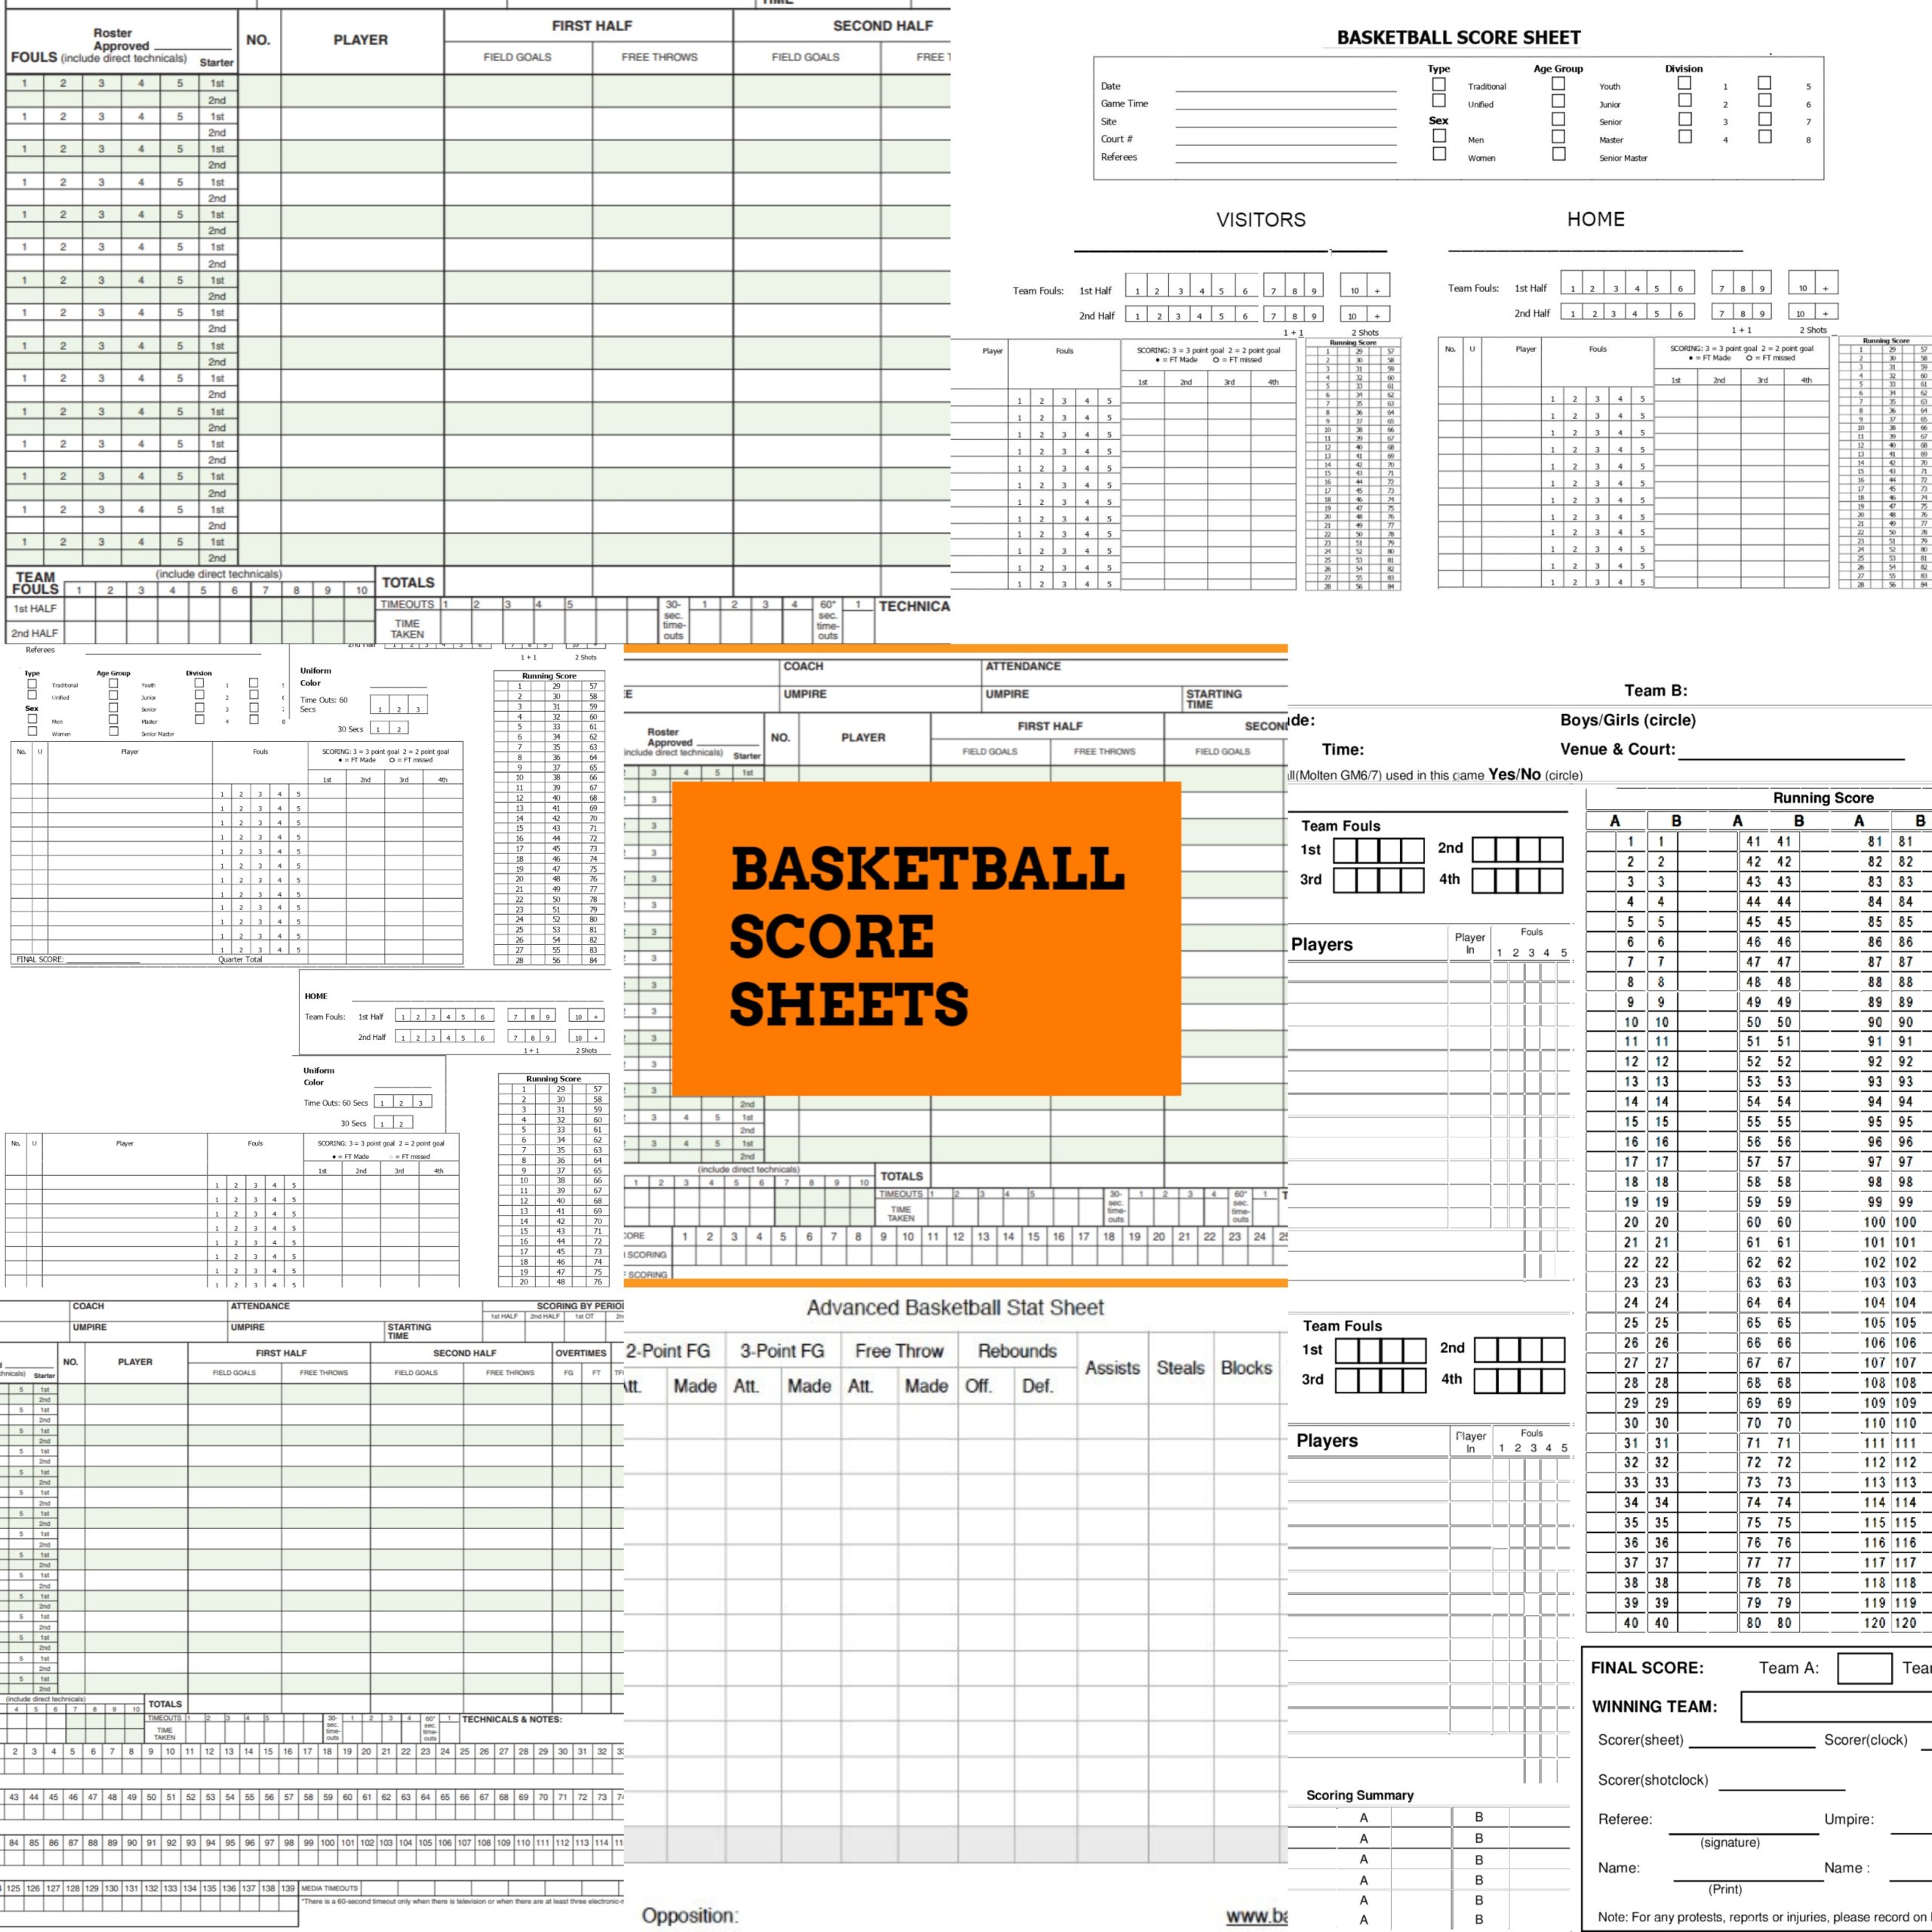 Free Printable Basketball Score Sheet Template from www.interbasket.net